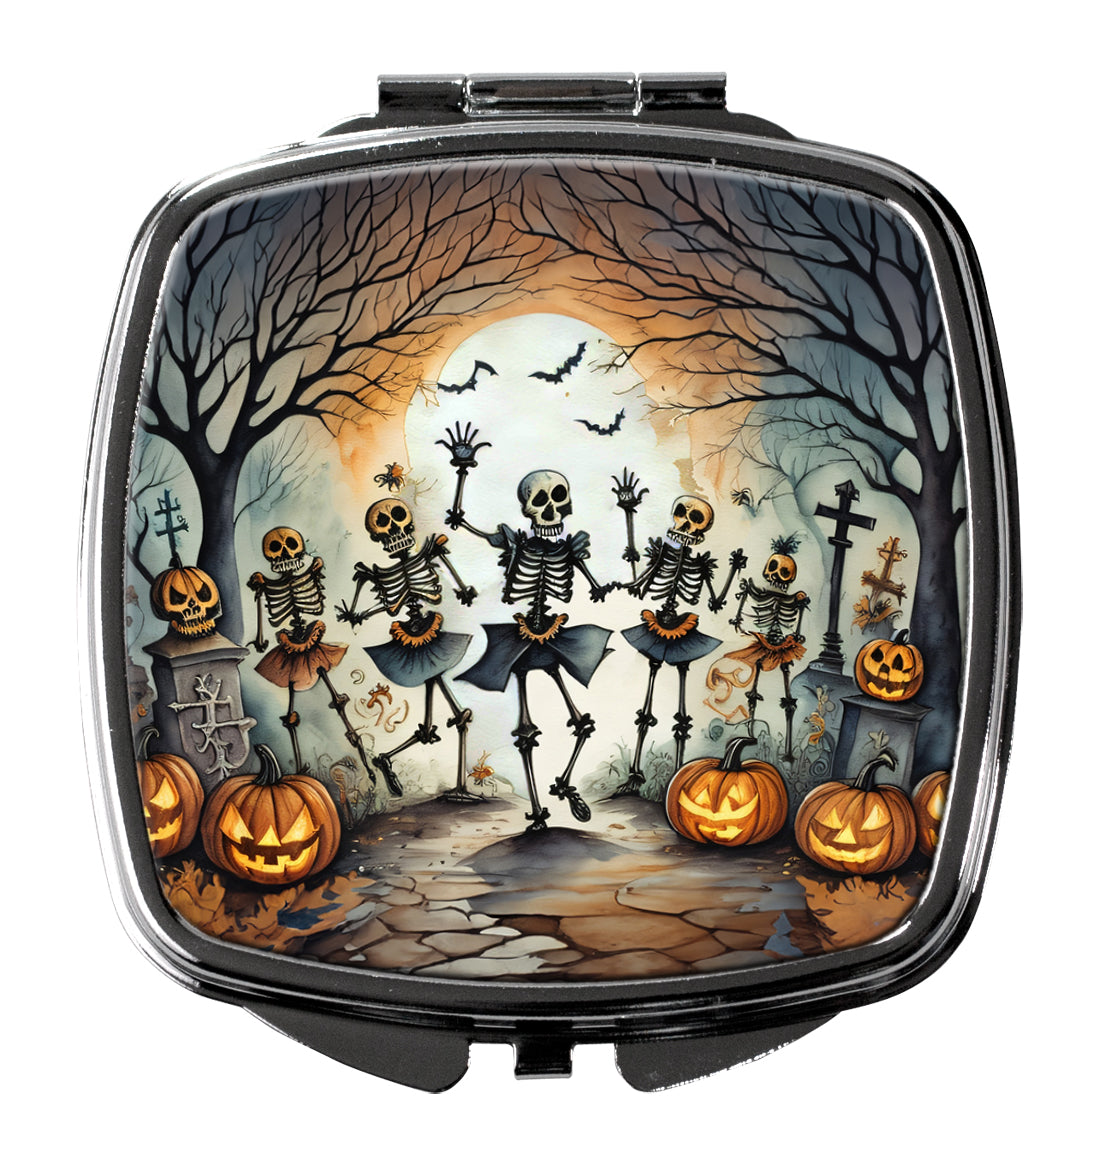 Buy this Dancing Skeletons Spooky Halloween Compact Mirror